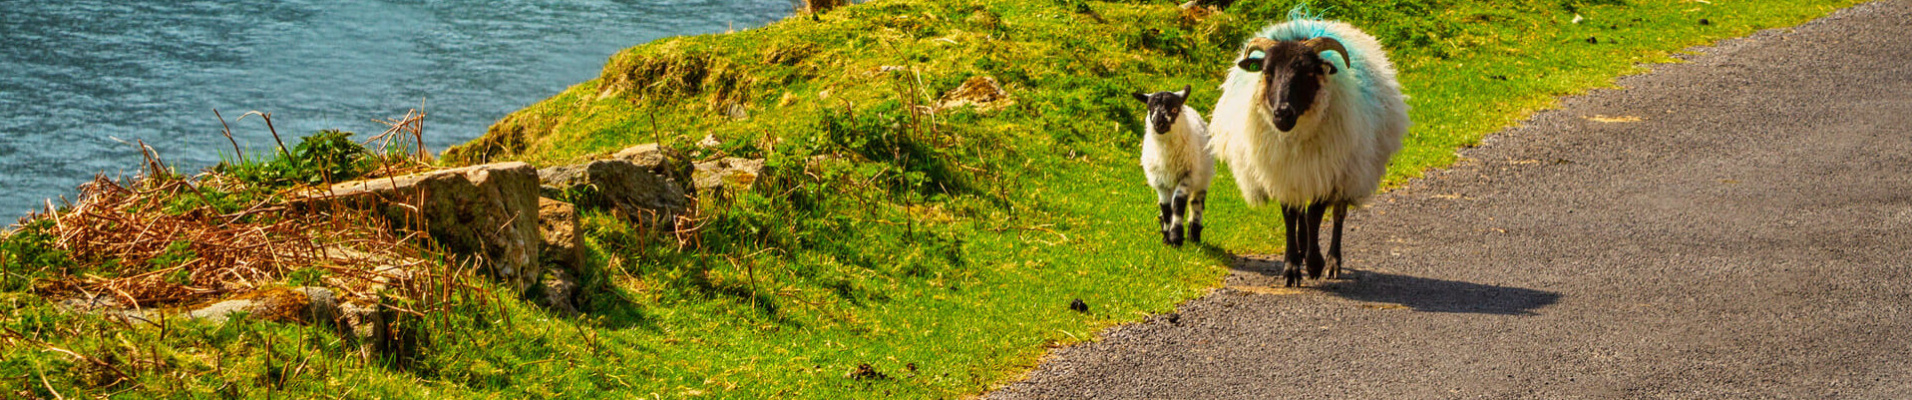 moutons-county-mayo-irlande